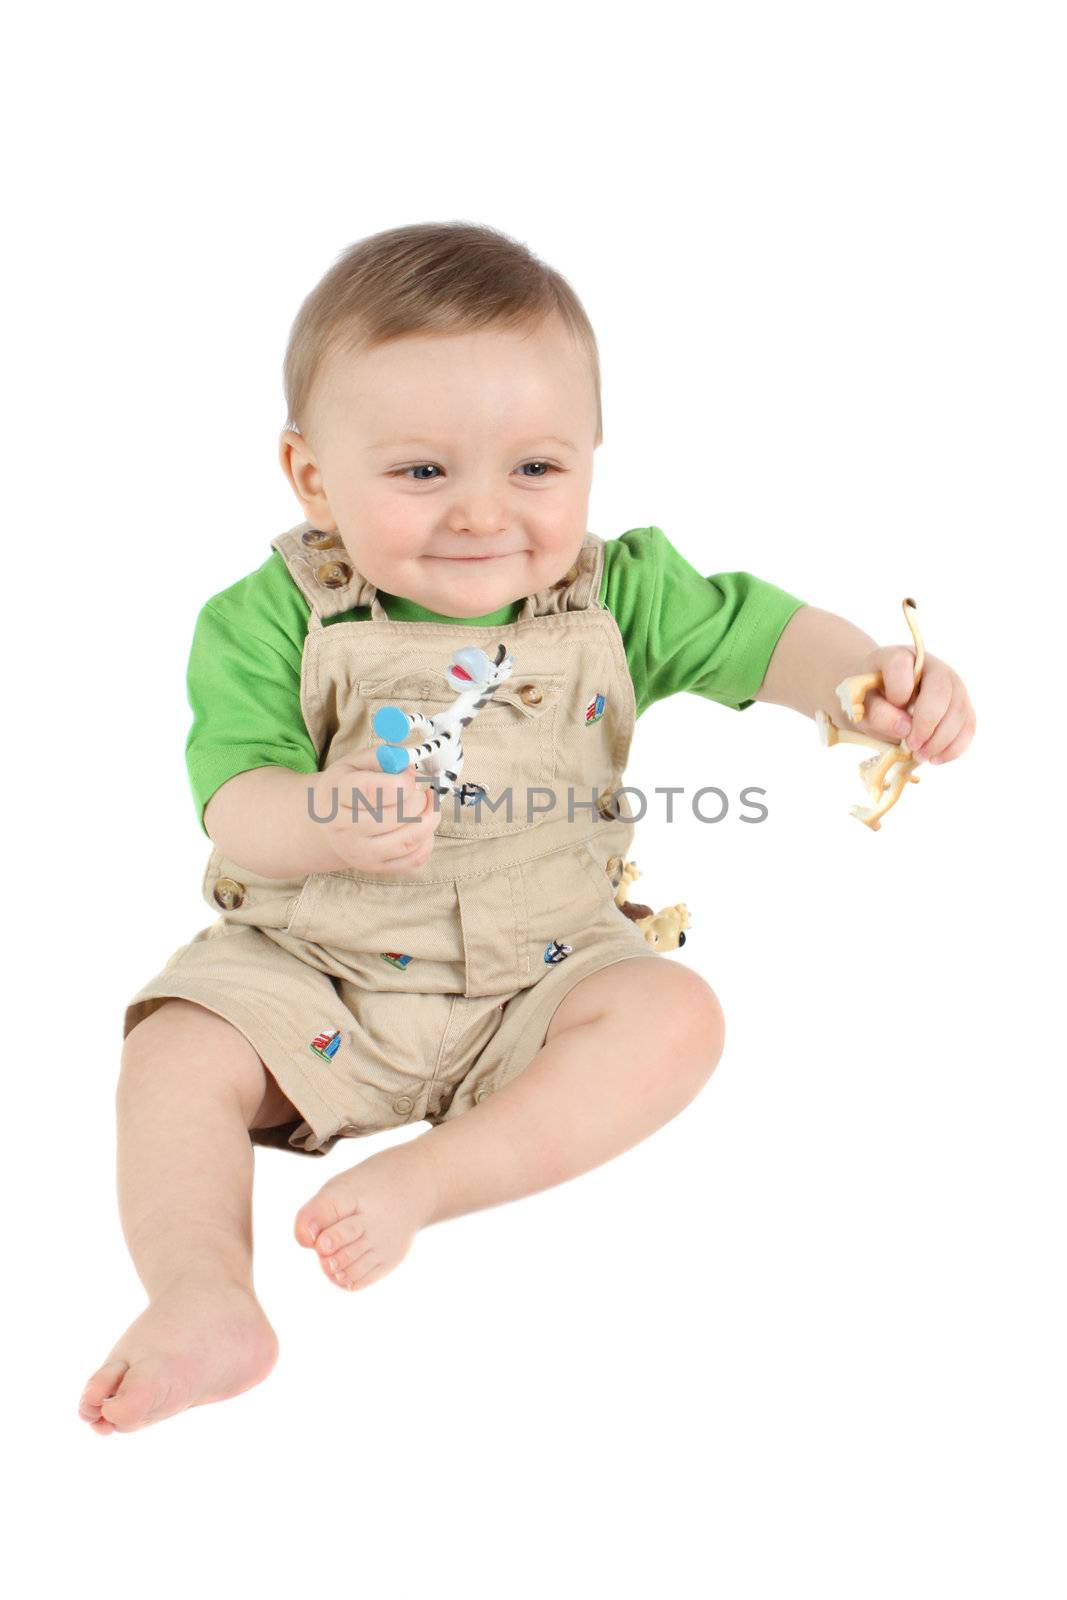 Cute baby boy wearing a safari outfit